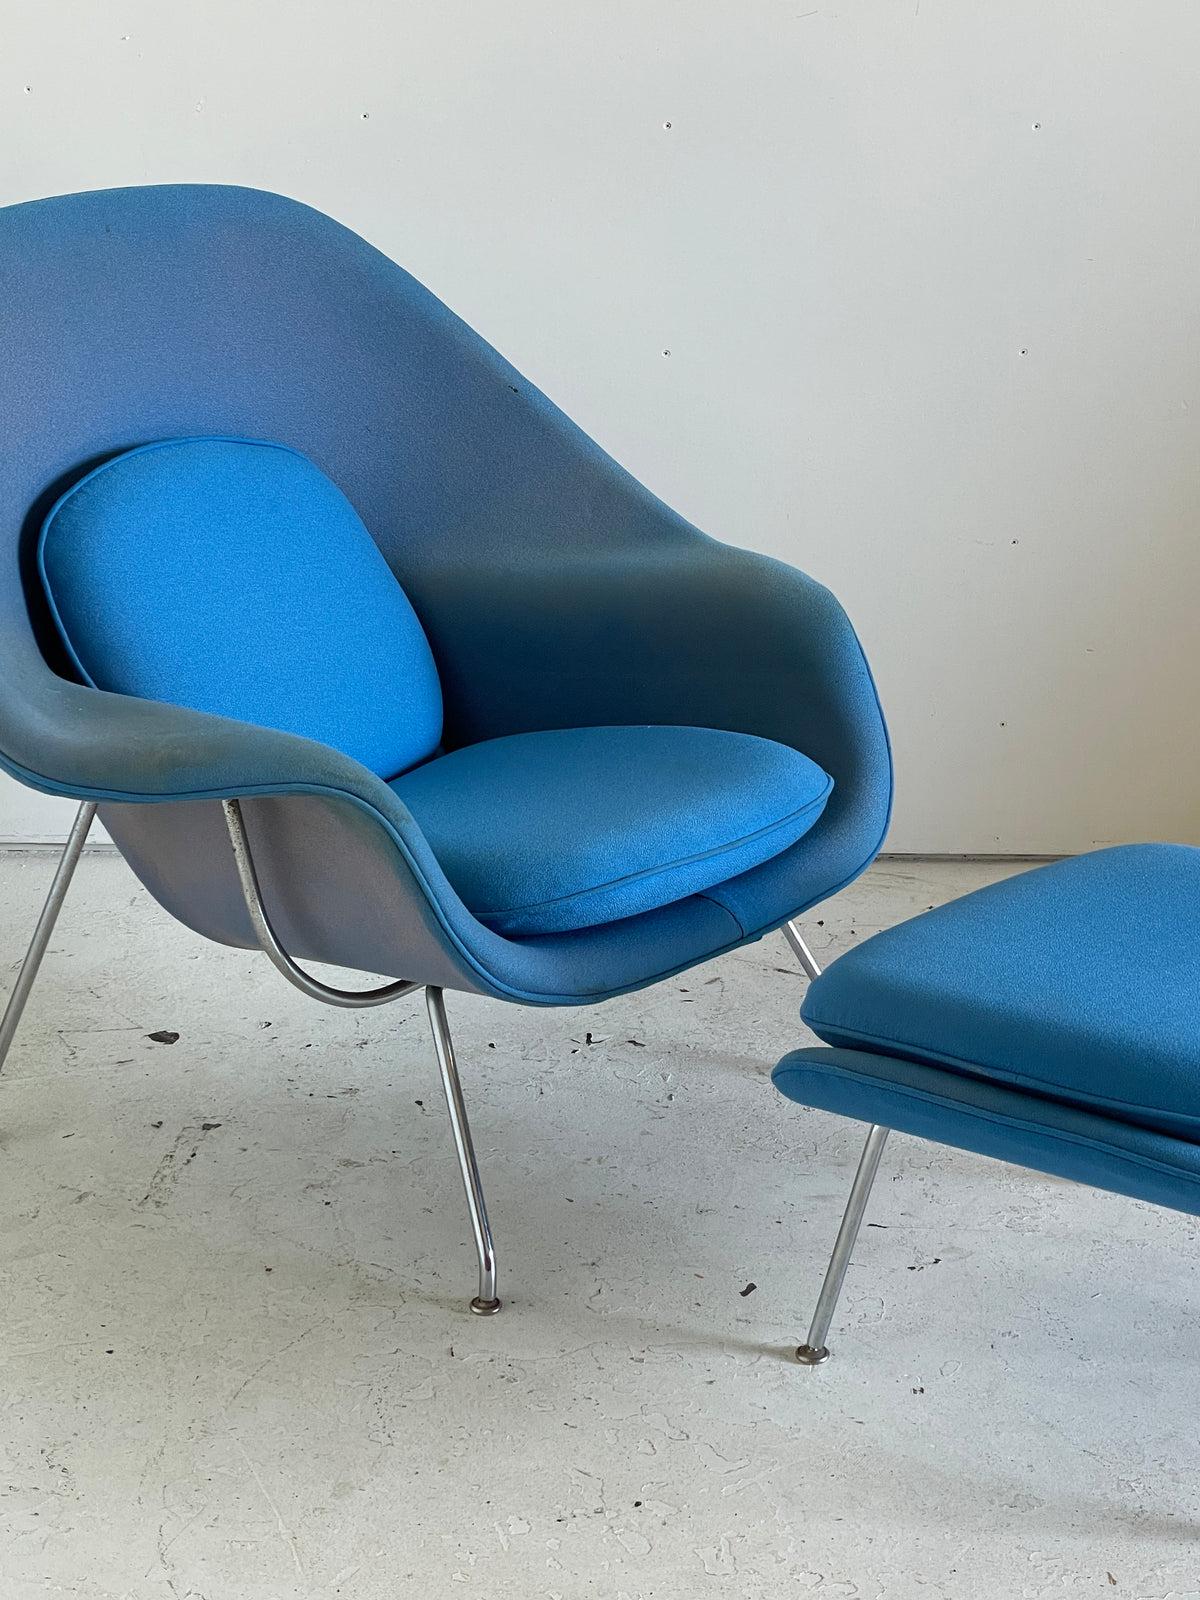 Original fabric early production Womb Chair & Ottoman by Eero Saarinen. 

Chair- 39.5